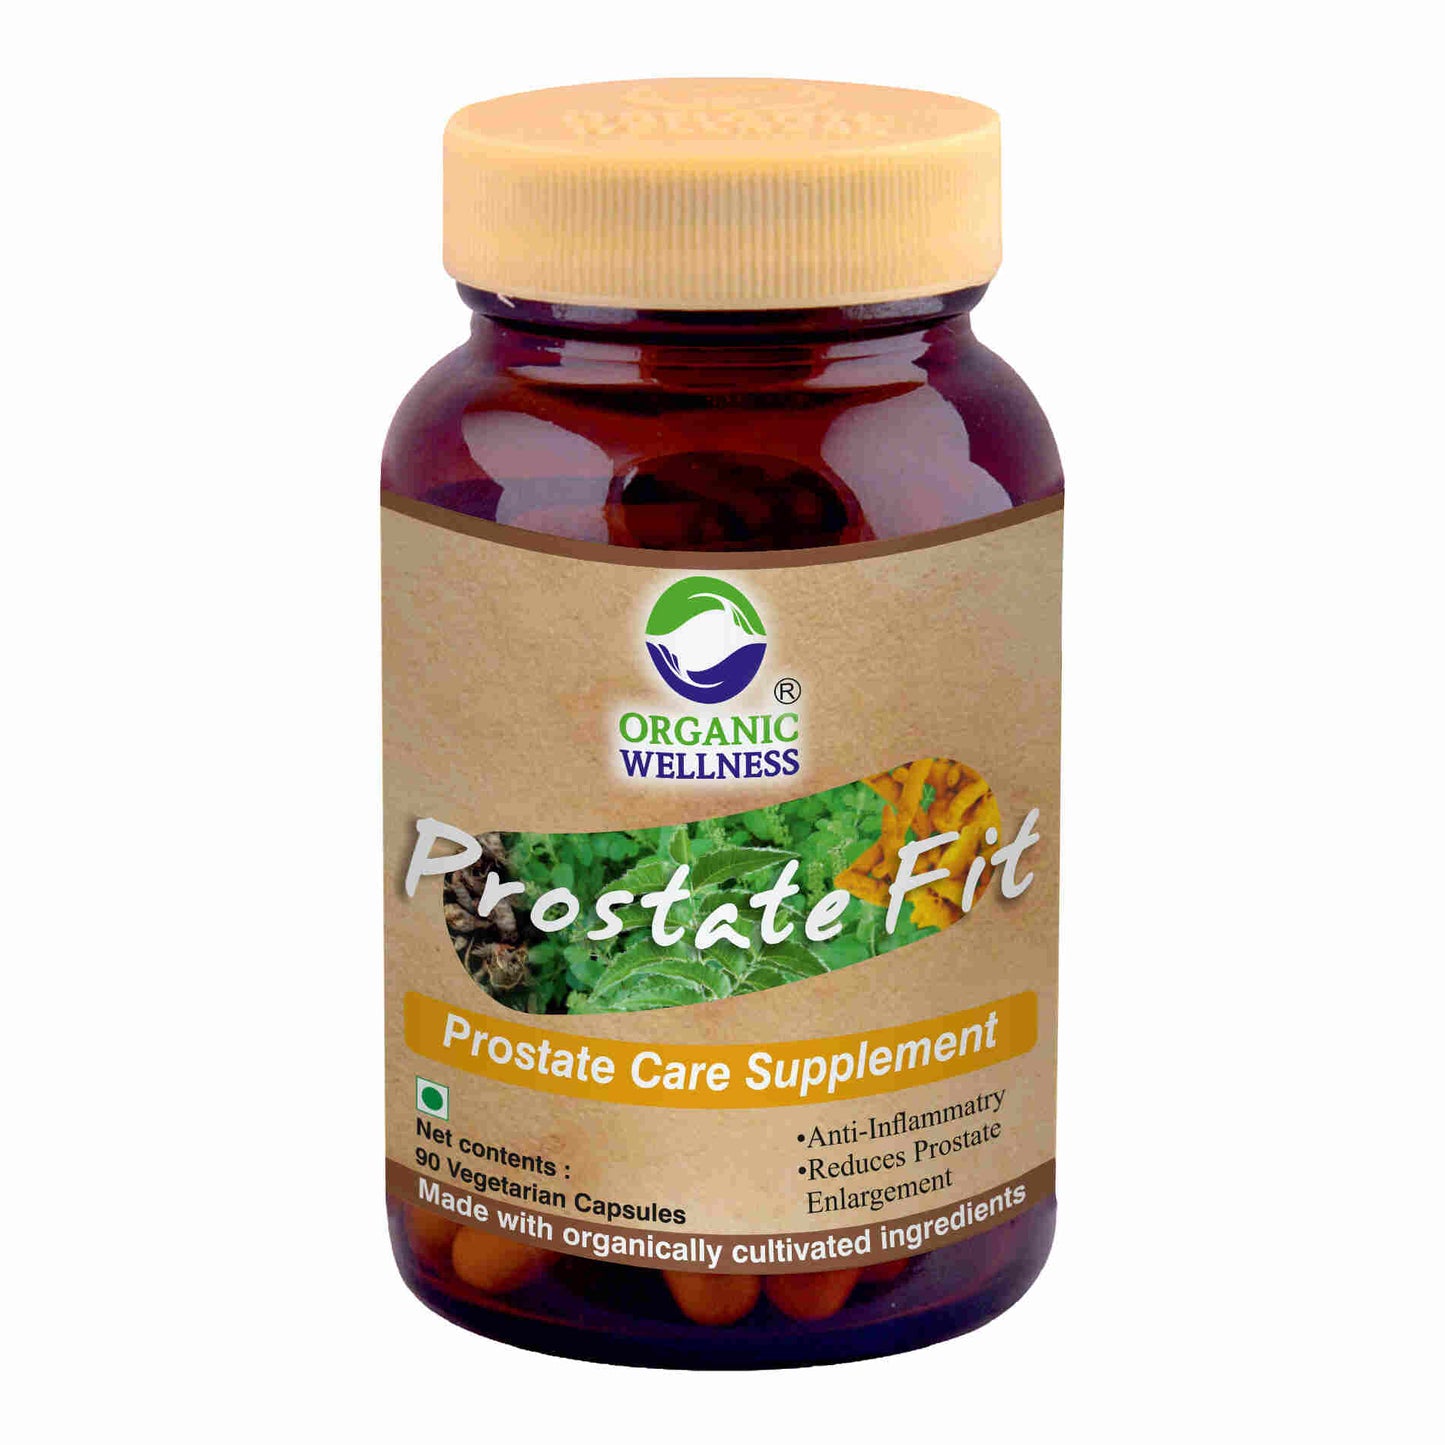 Organic Wellness Prostate-Fit